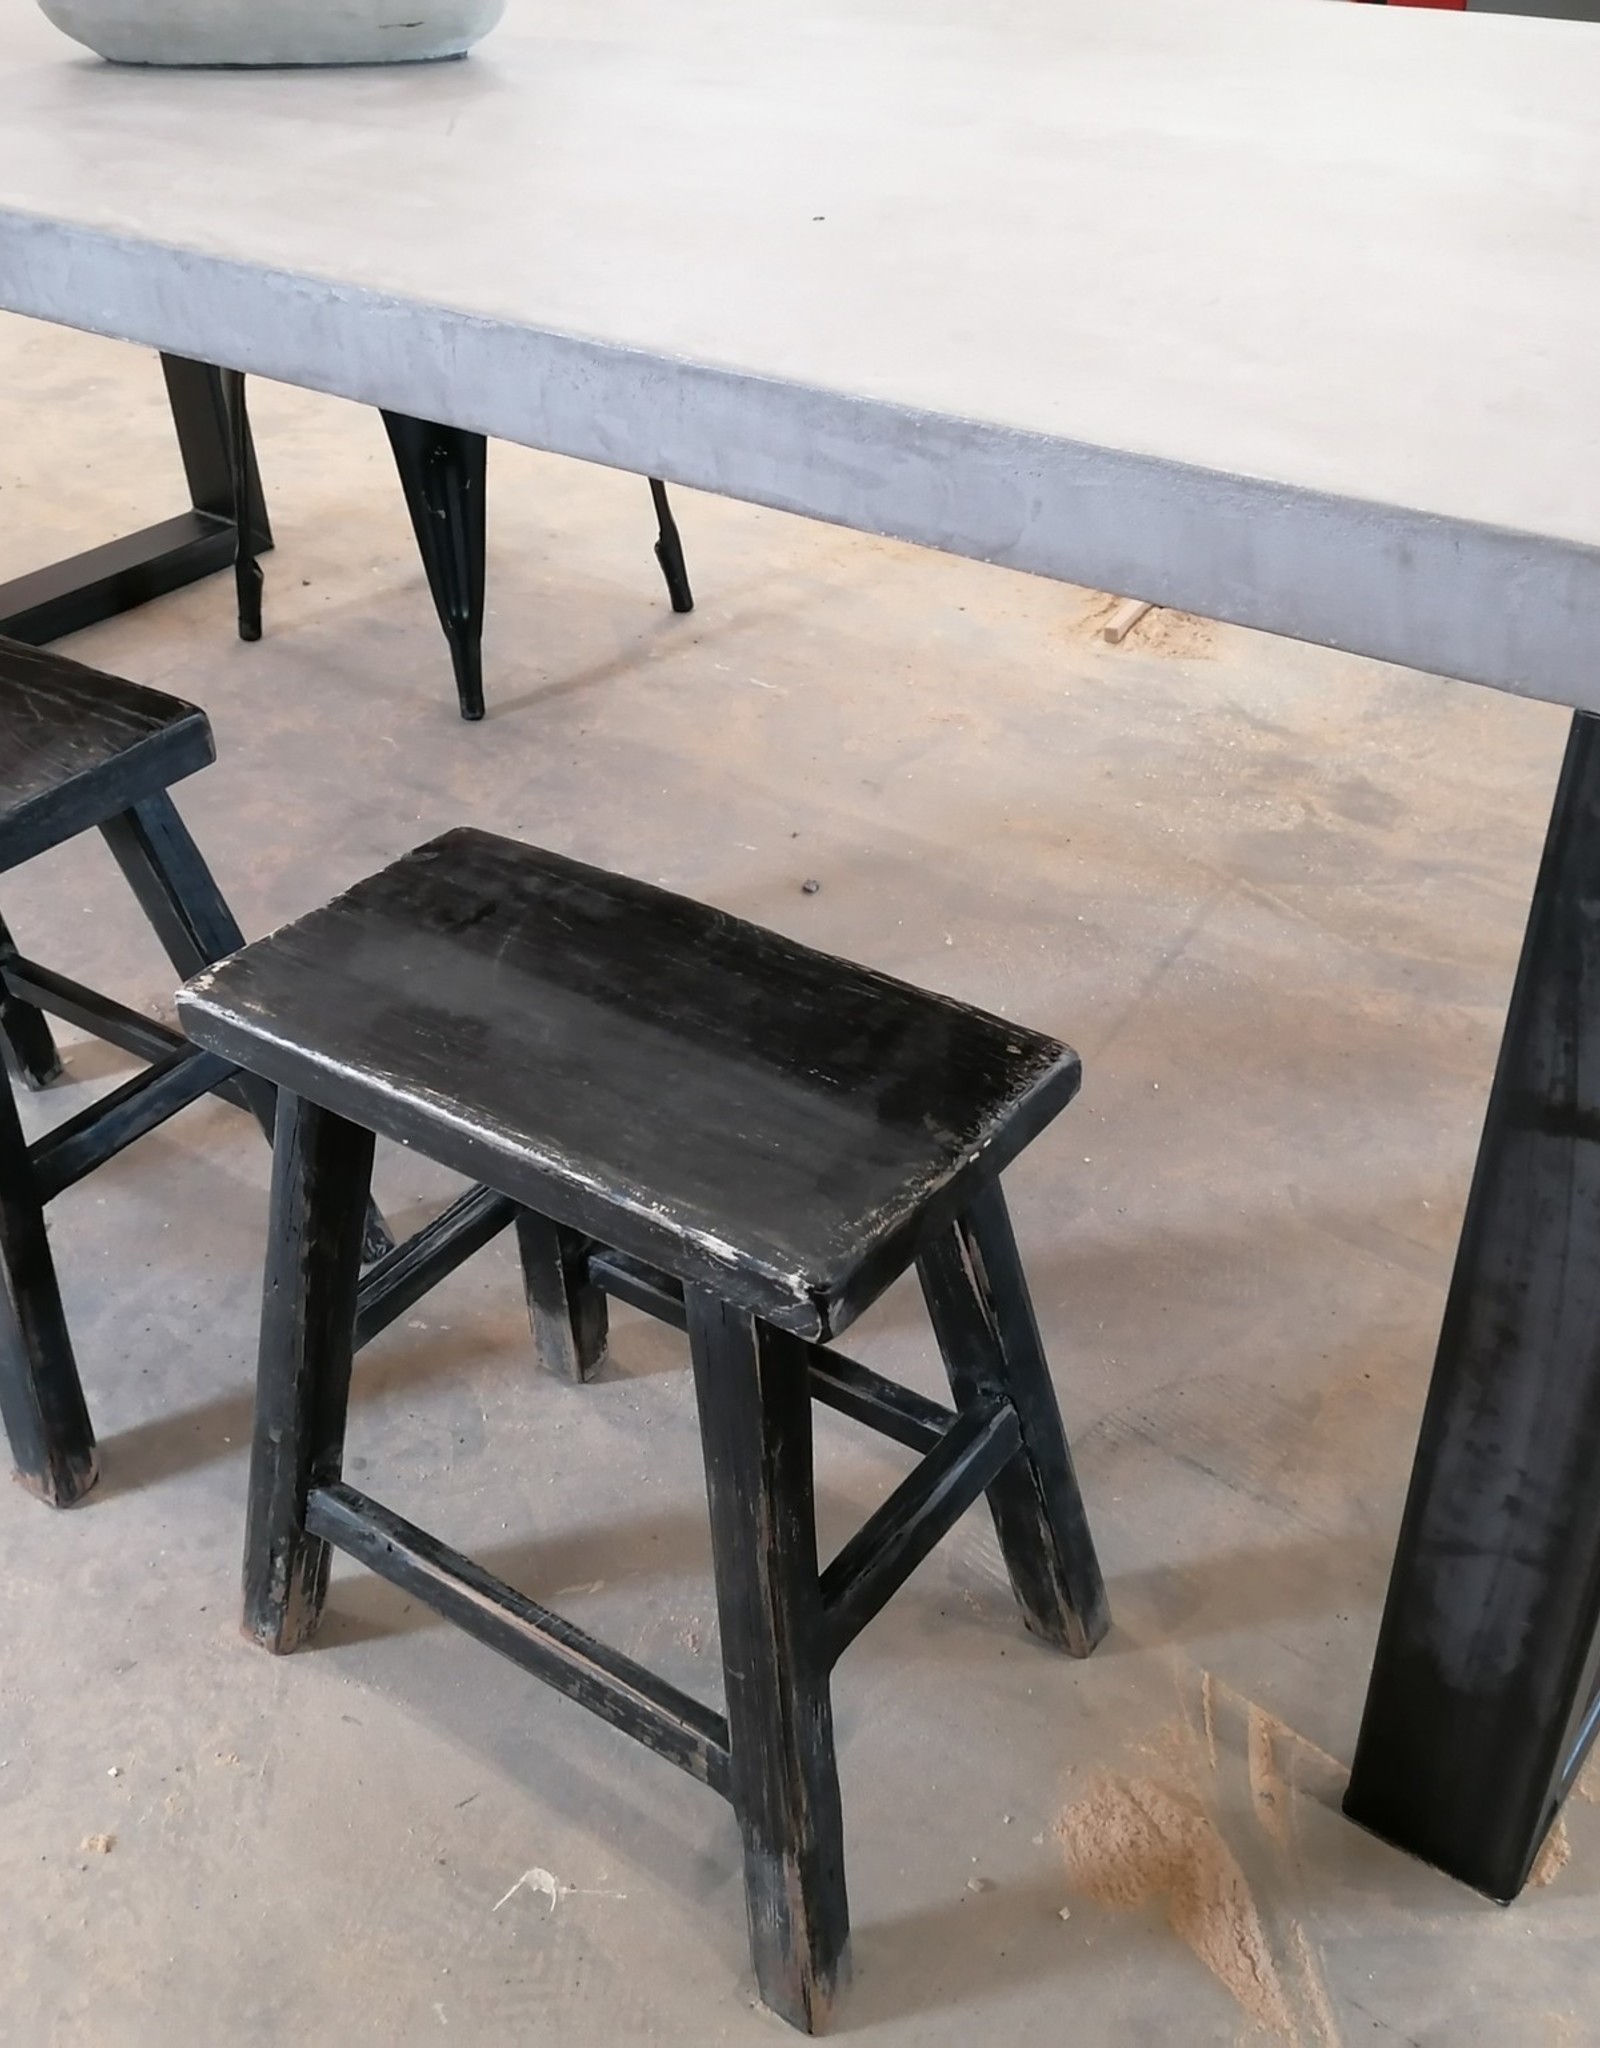 Mortex Concrete Stucco Table Metall Legs